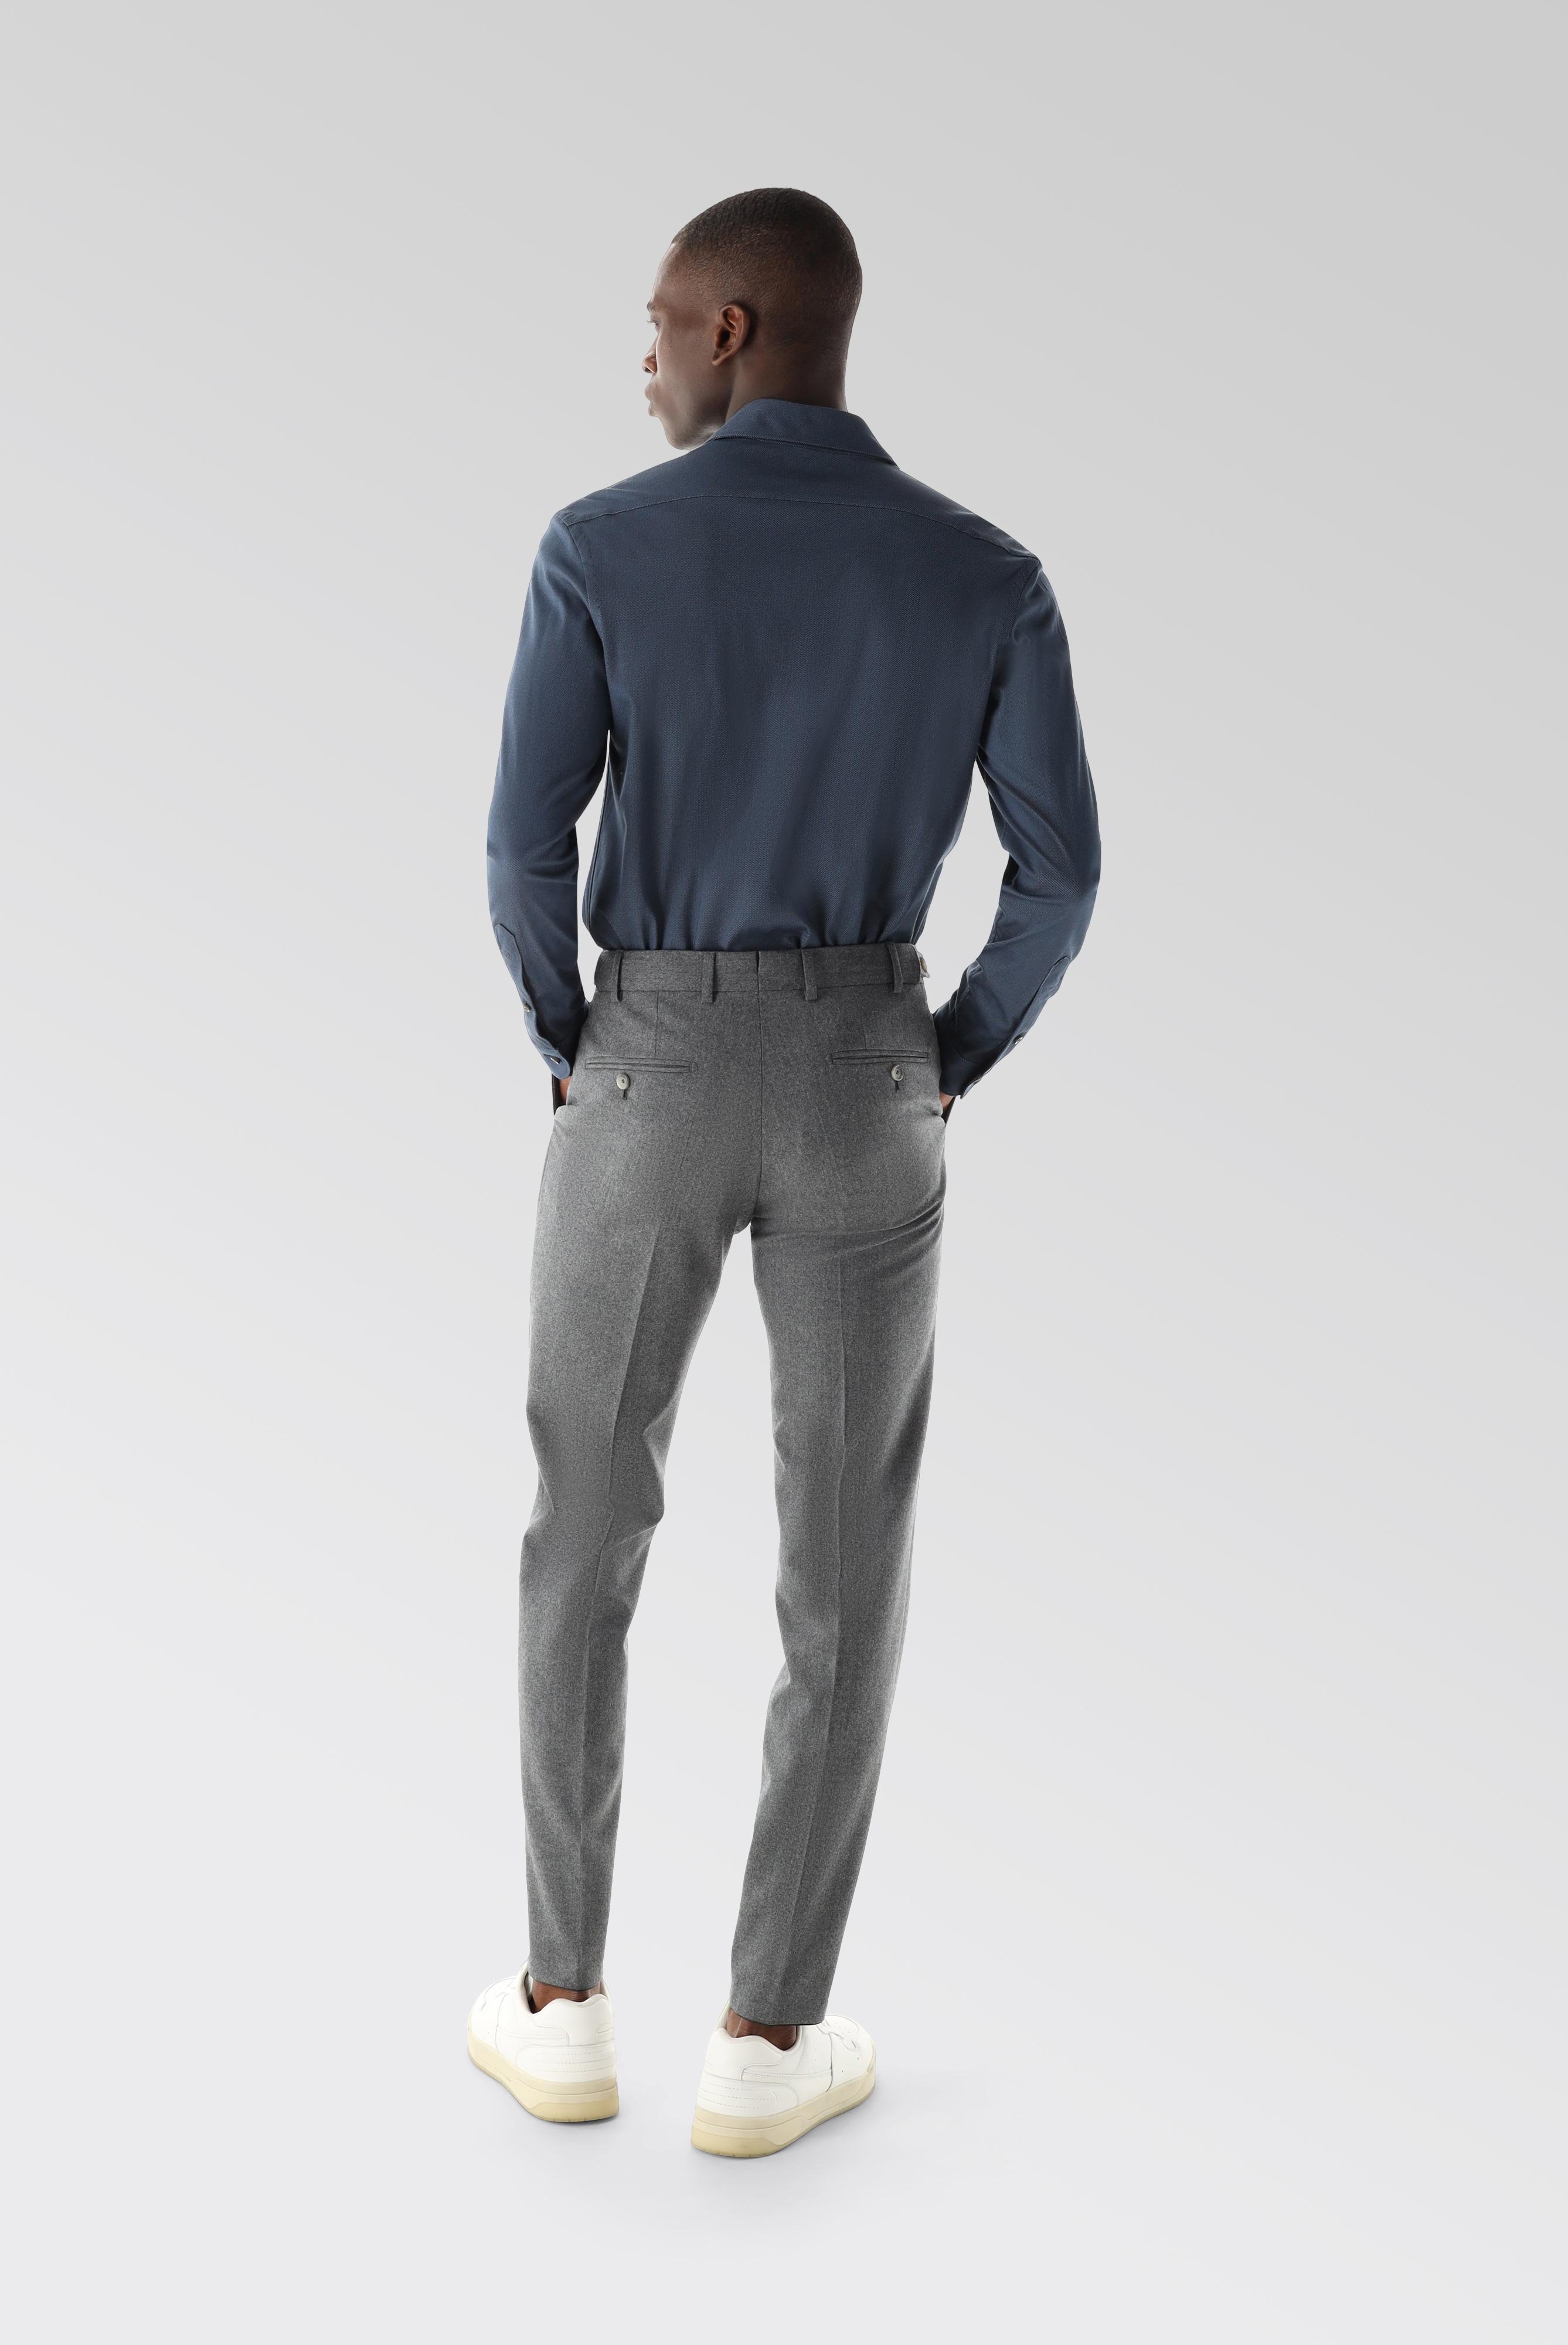 Casual Hemden+Jersey Hemd mit Twill Druck Tailor Fit+20.1683.UC.187749.782.XL